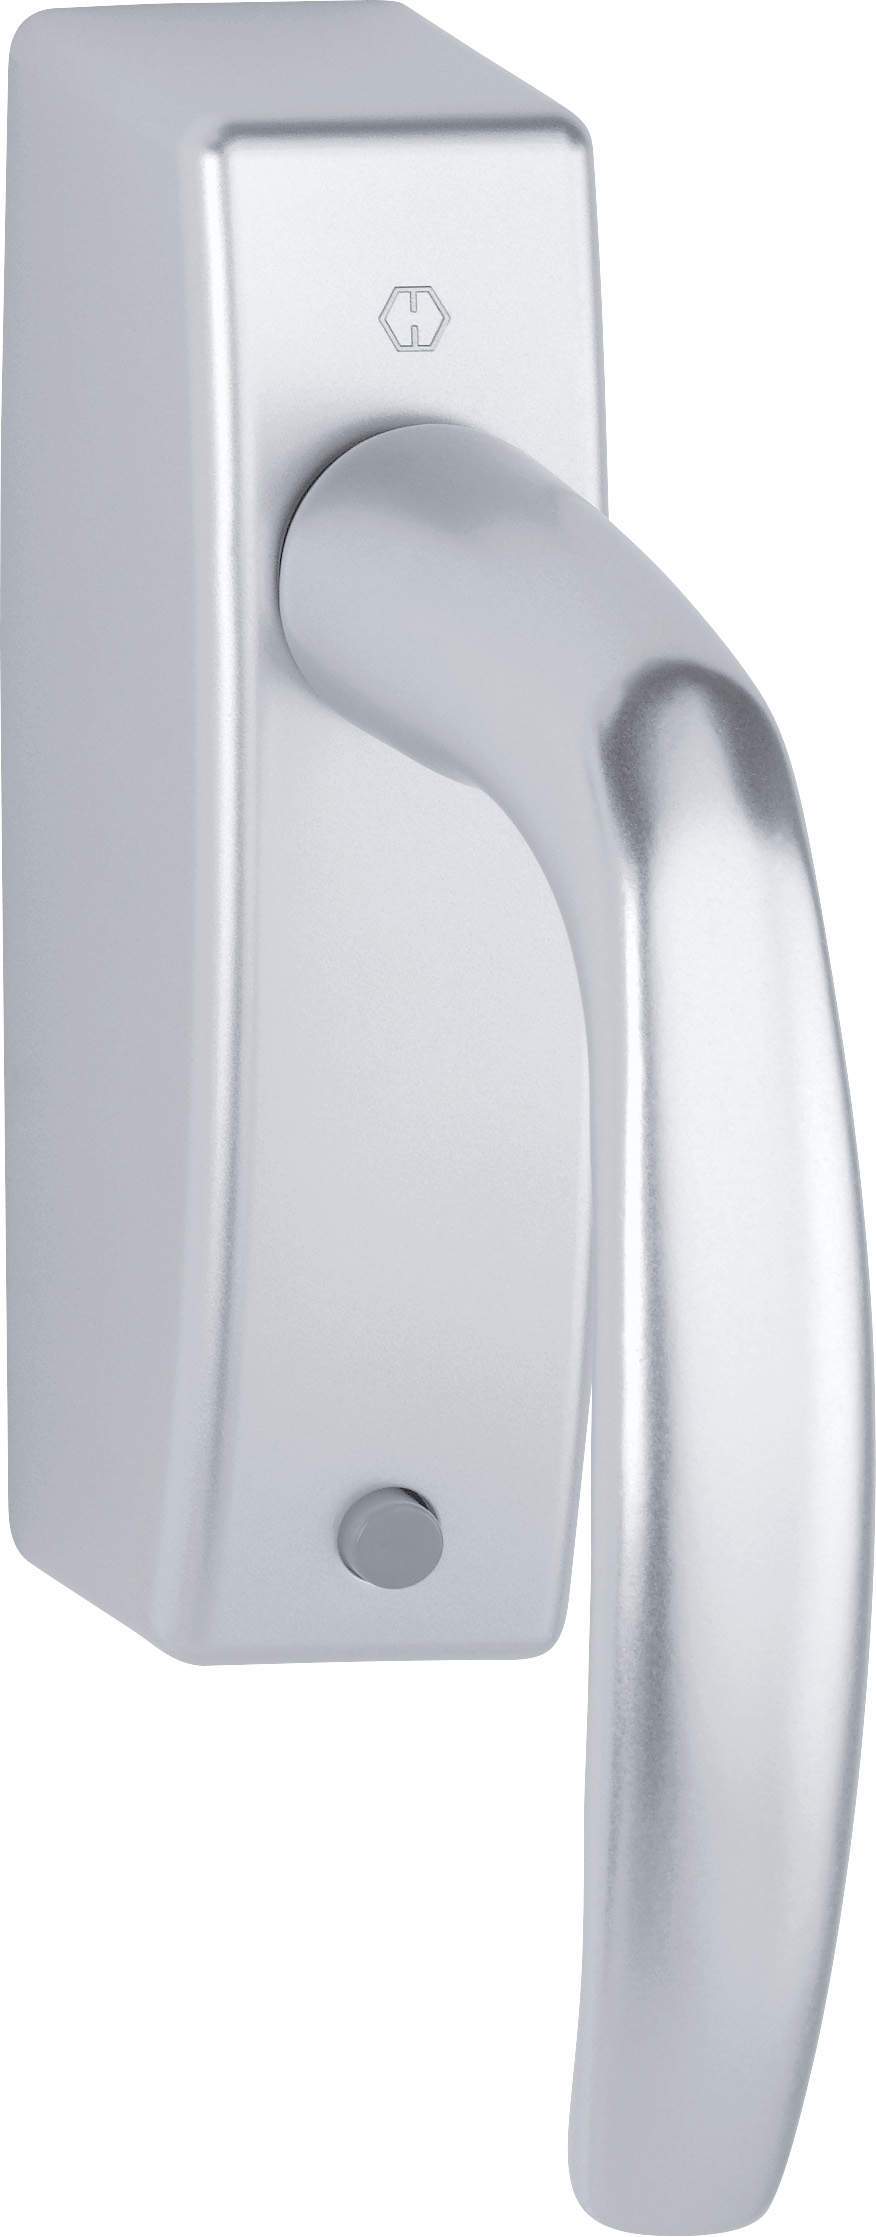 AutoLock eWindow handgreep Atlanta aluminium zilver, 37 mm pin, bidirectioneel